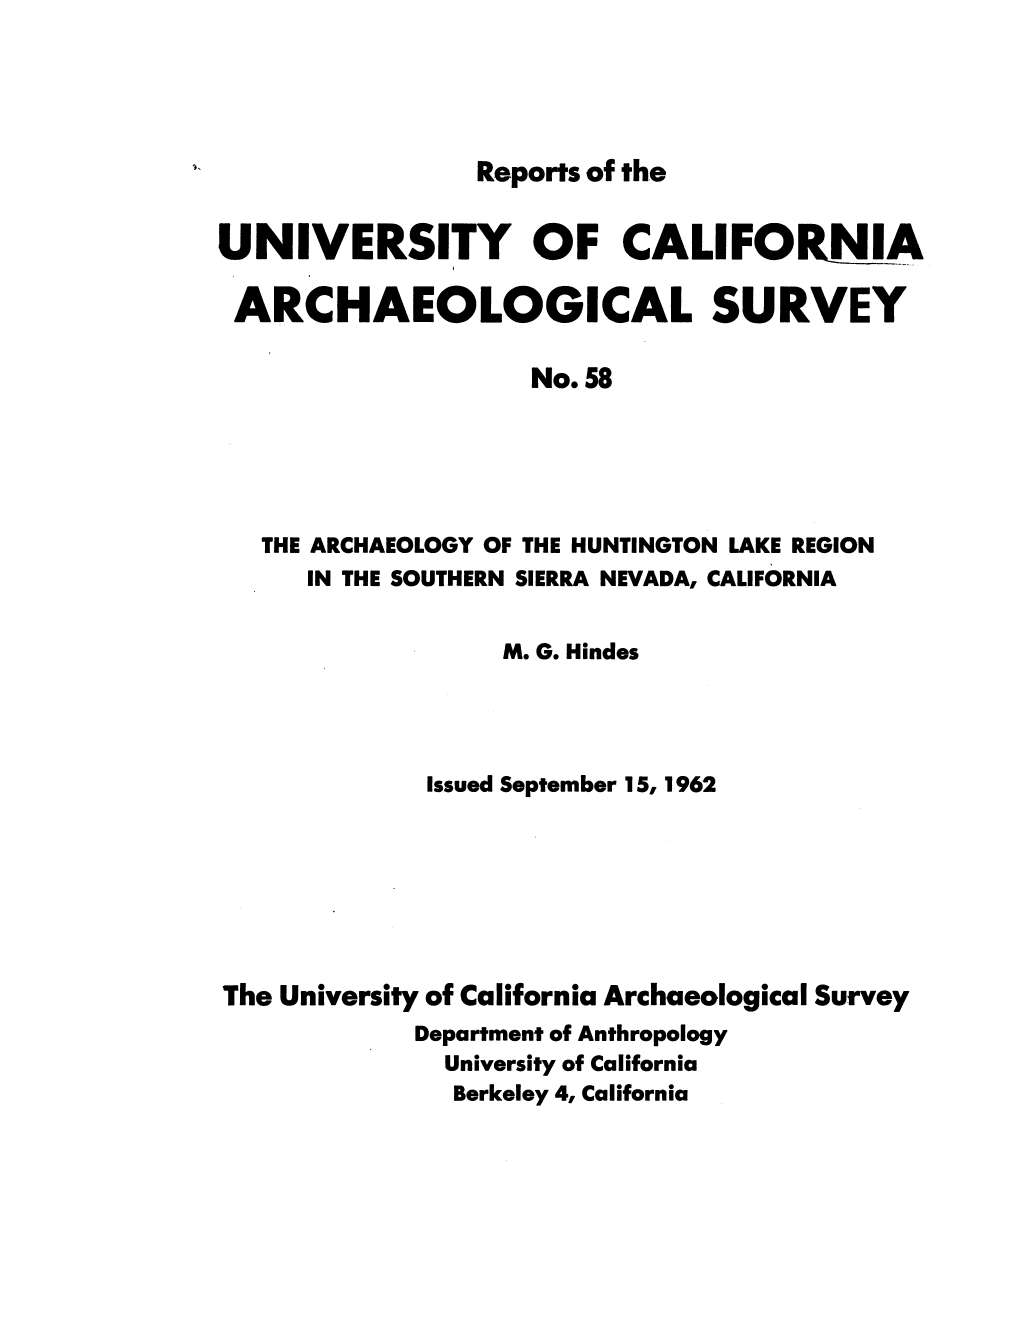 UNIVERSITY of CALIFORNIA ARCHAEOLOGICAL SURVEY No.58